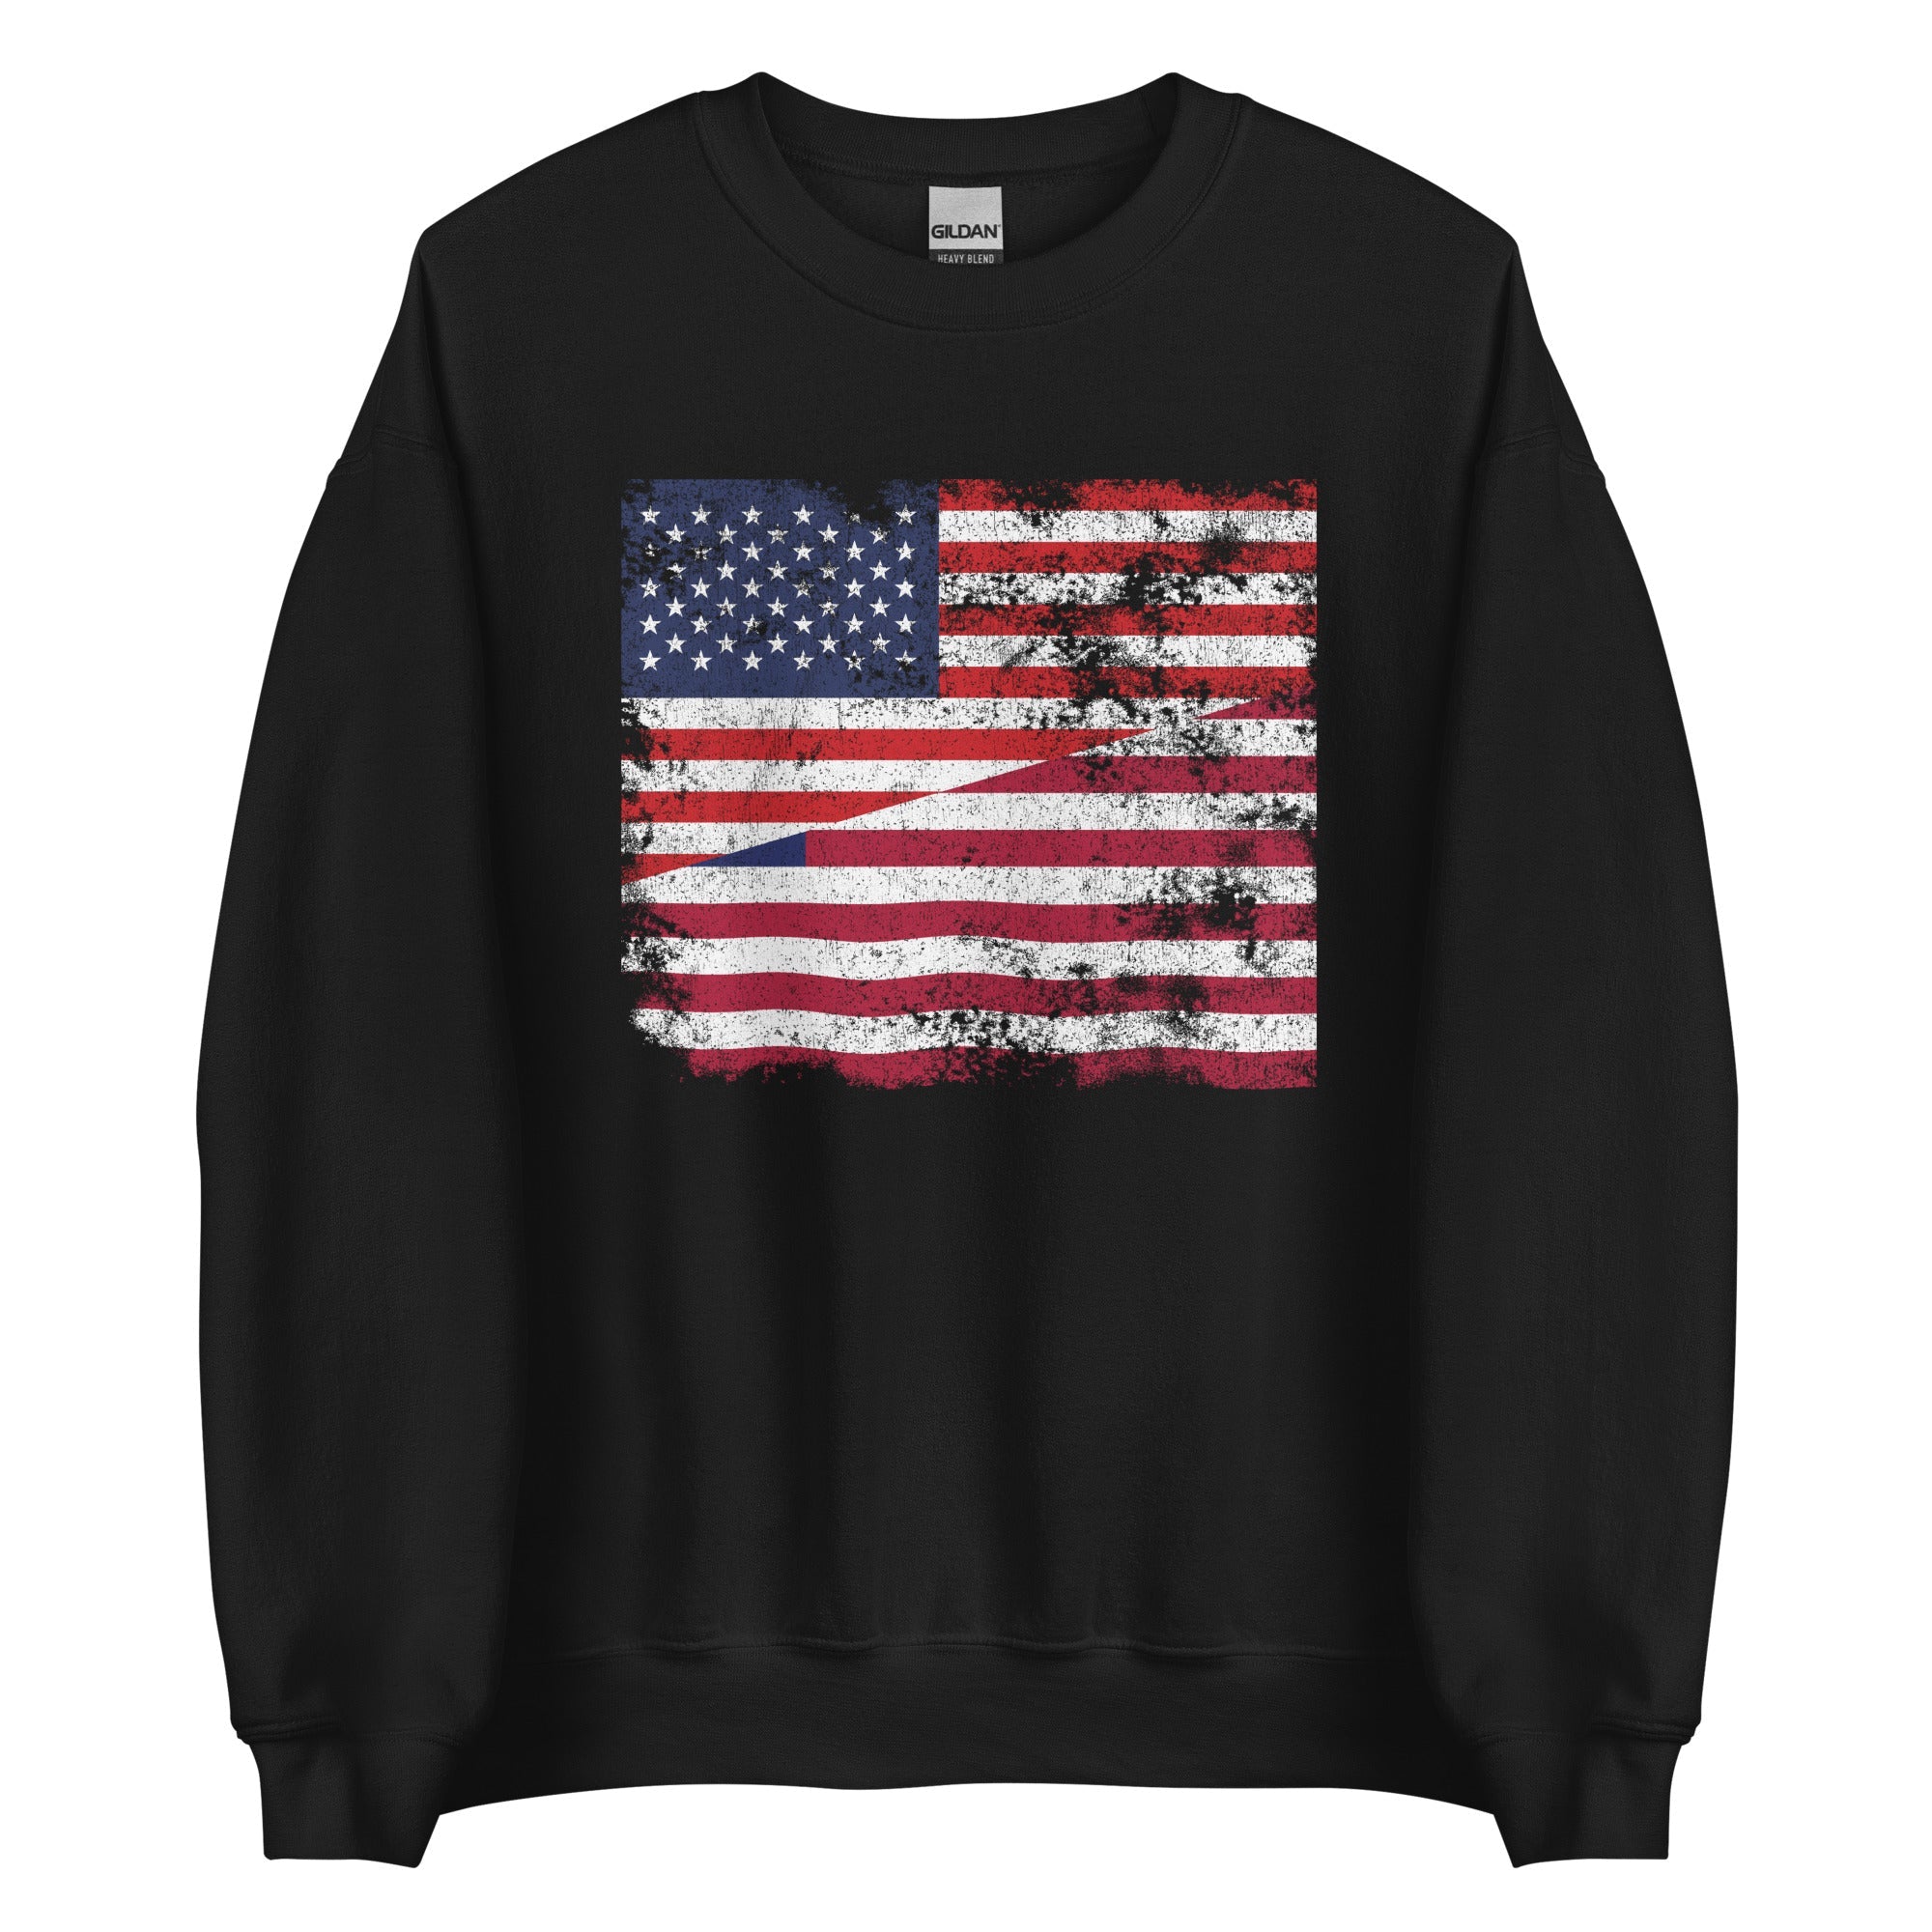 Liberia USA Flag Sweatshirt